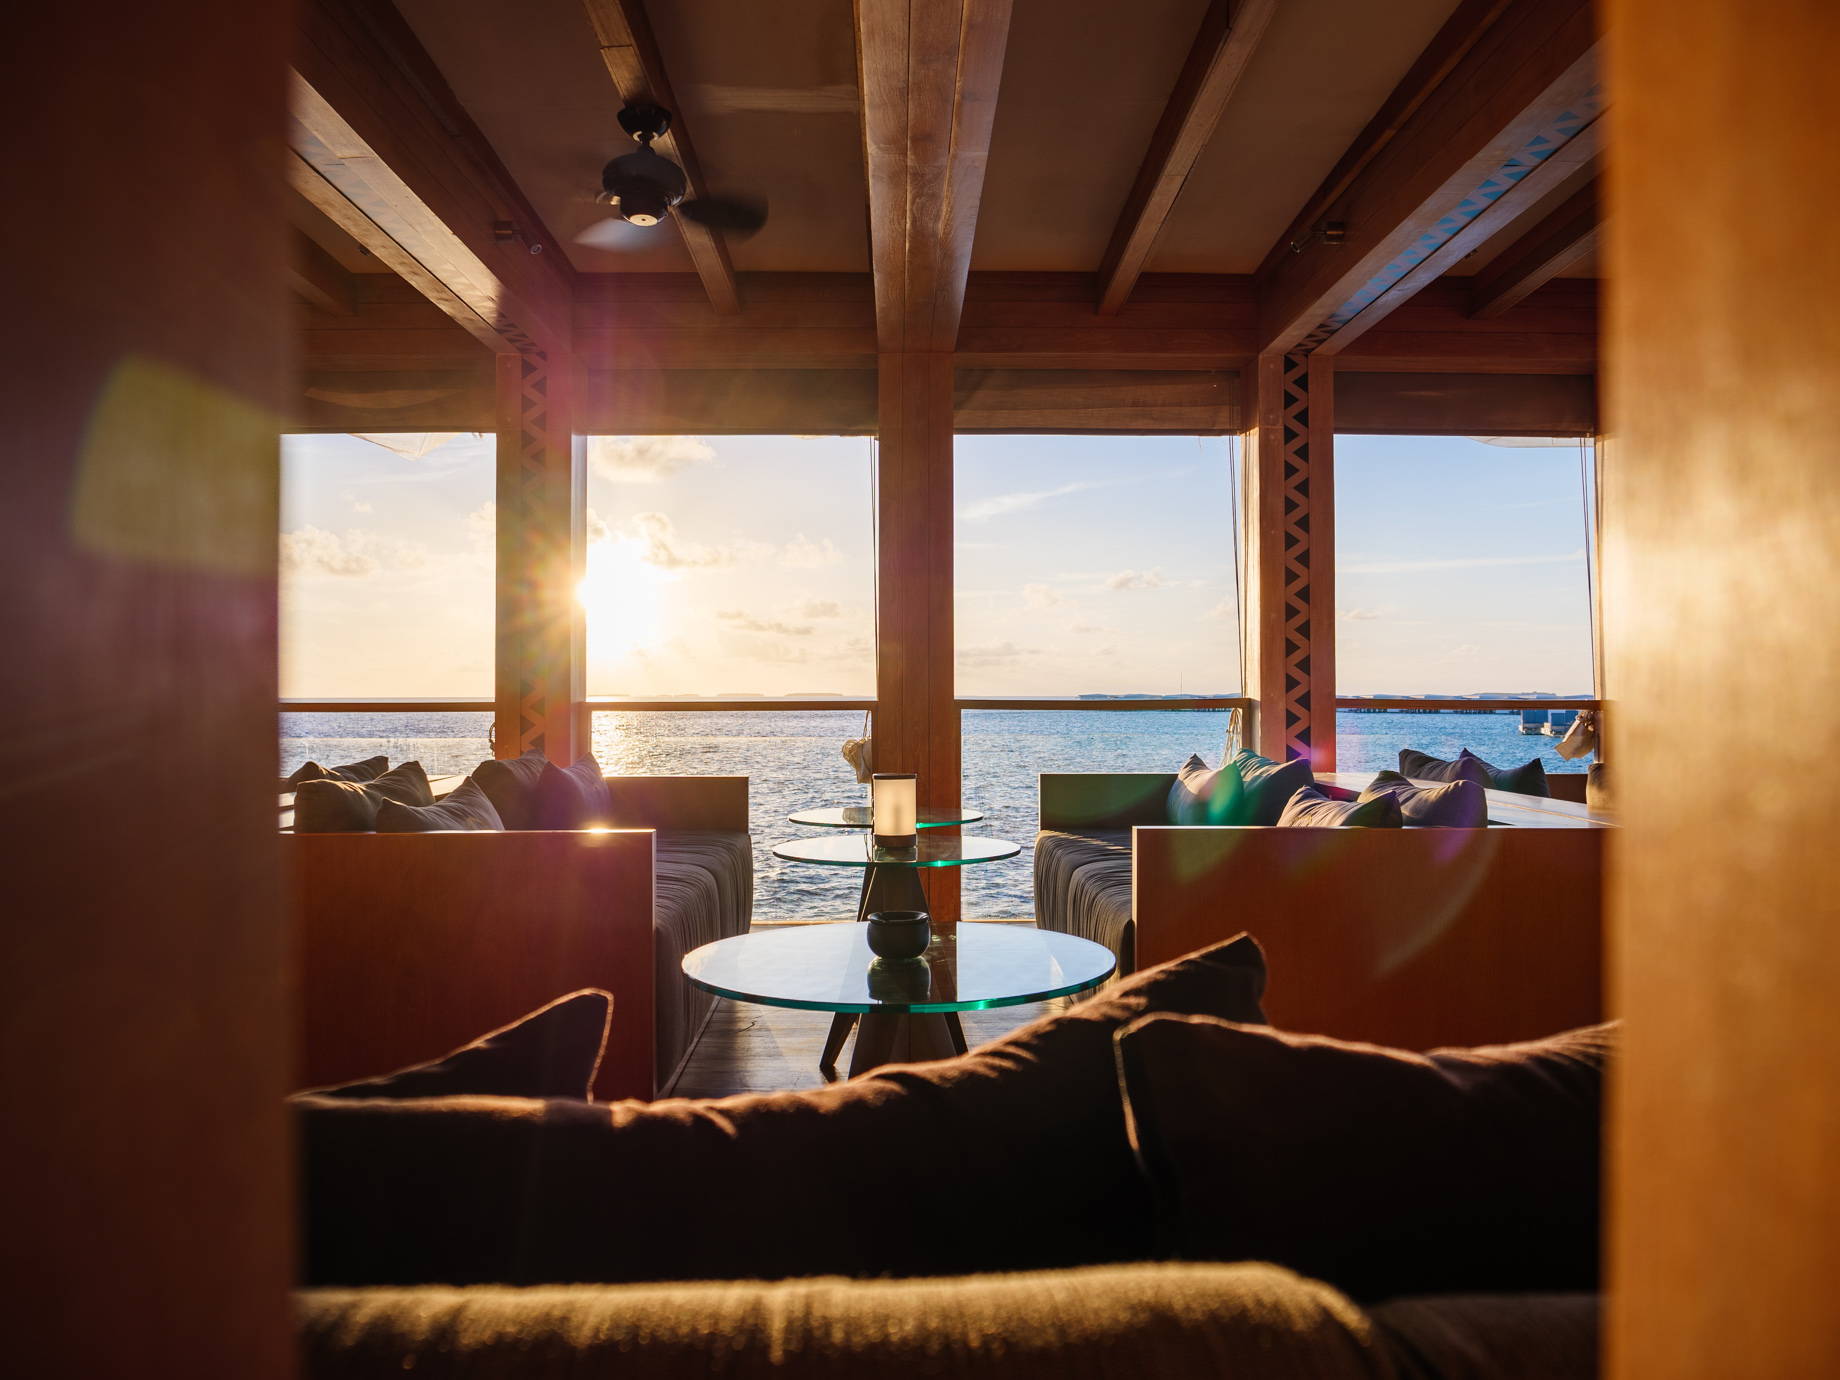 Amilla Fushi Resort and Residences – Baa Atoll, Maldives – Oceanfront OAK Lounge Sunset